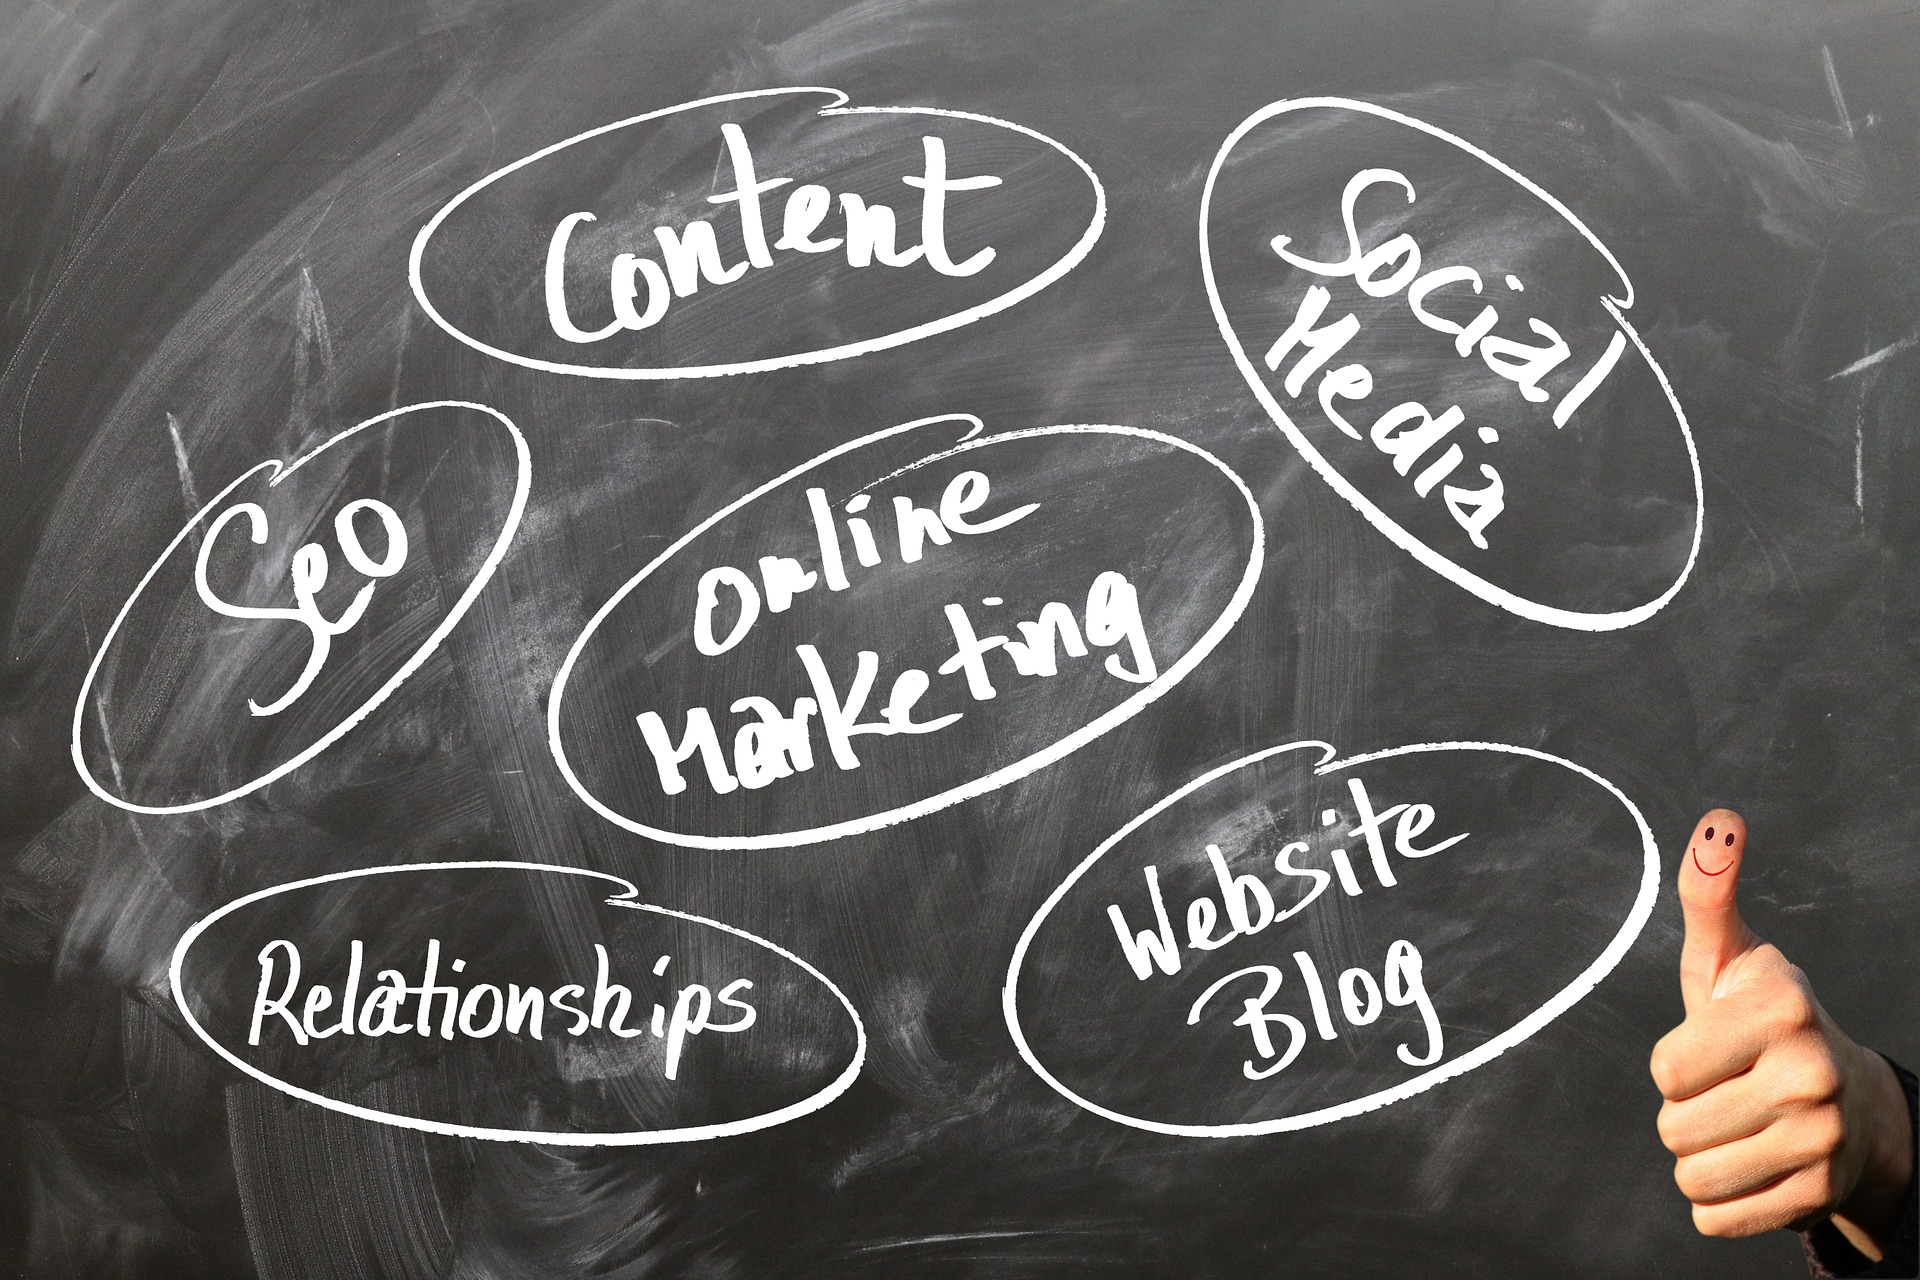 Internet Marketing, SEO, Content Marketing, Online Marketing, Website Blog, Blogging, Social Media, Relationship Marketing